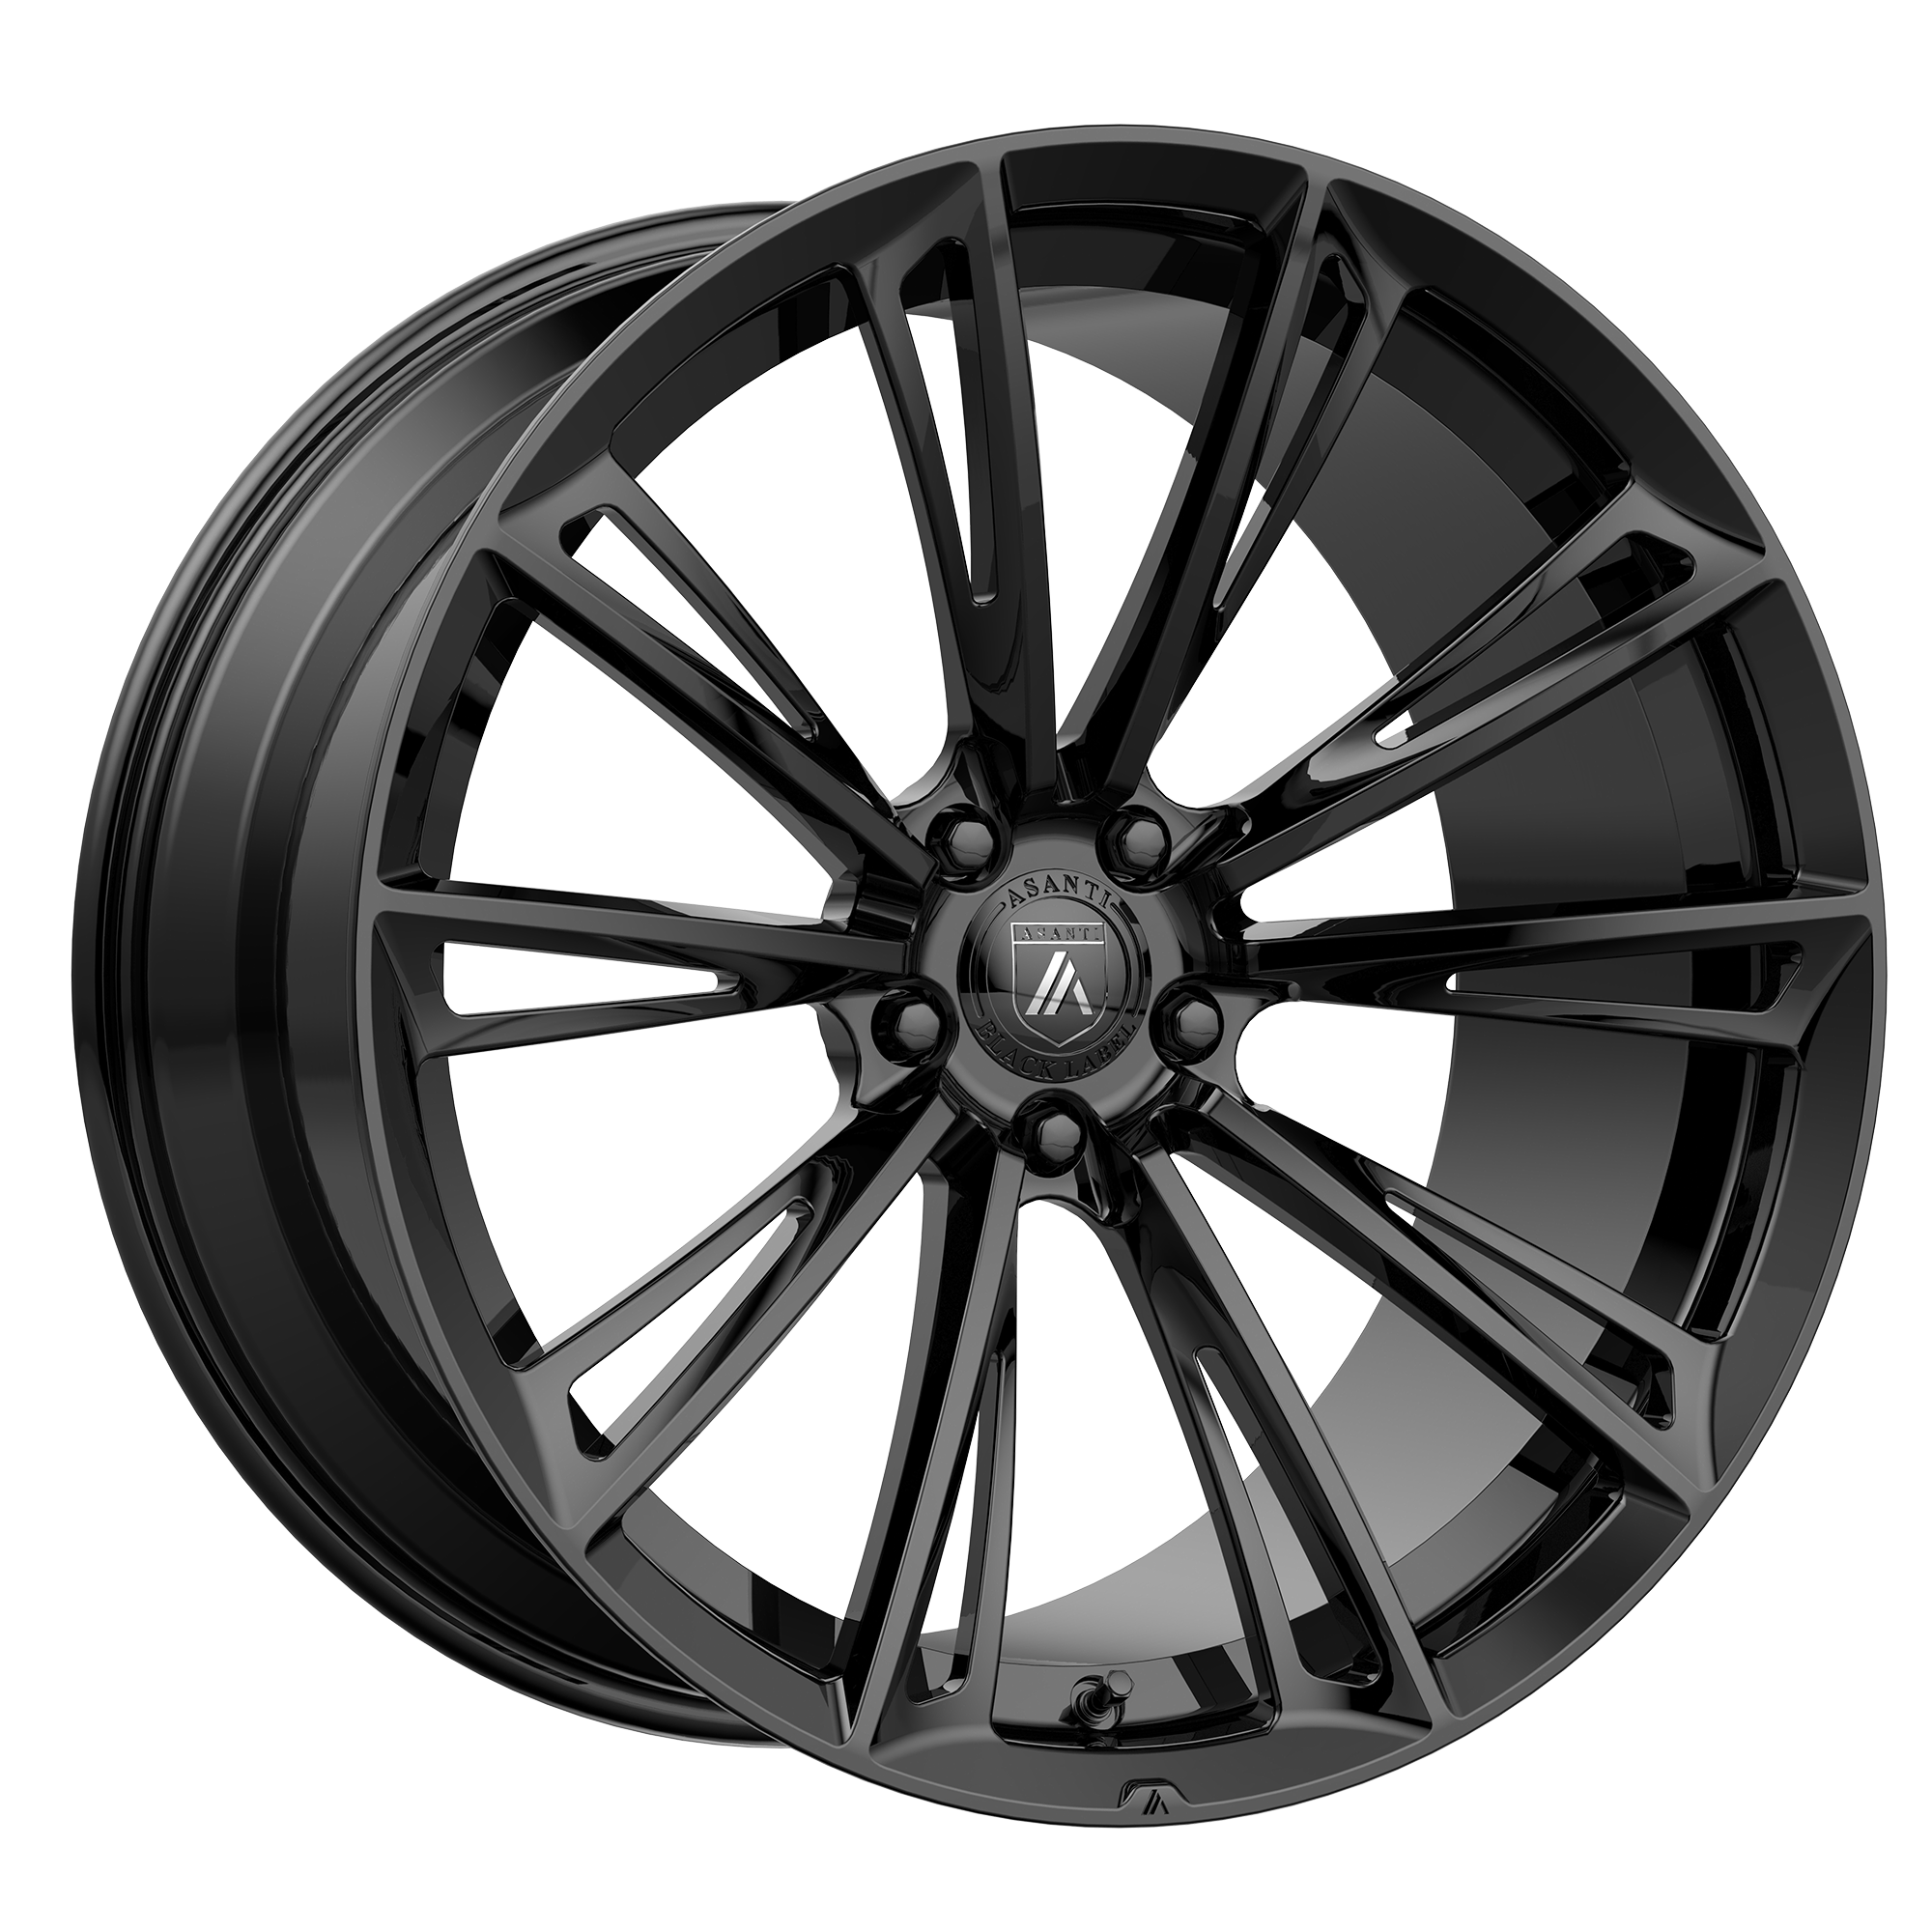 CORONA 22x10.5 5x120.00 GLOSS BLACK (35 mm) - Tires and Engine Performance